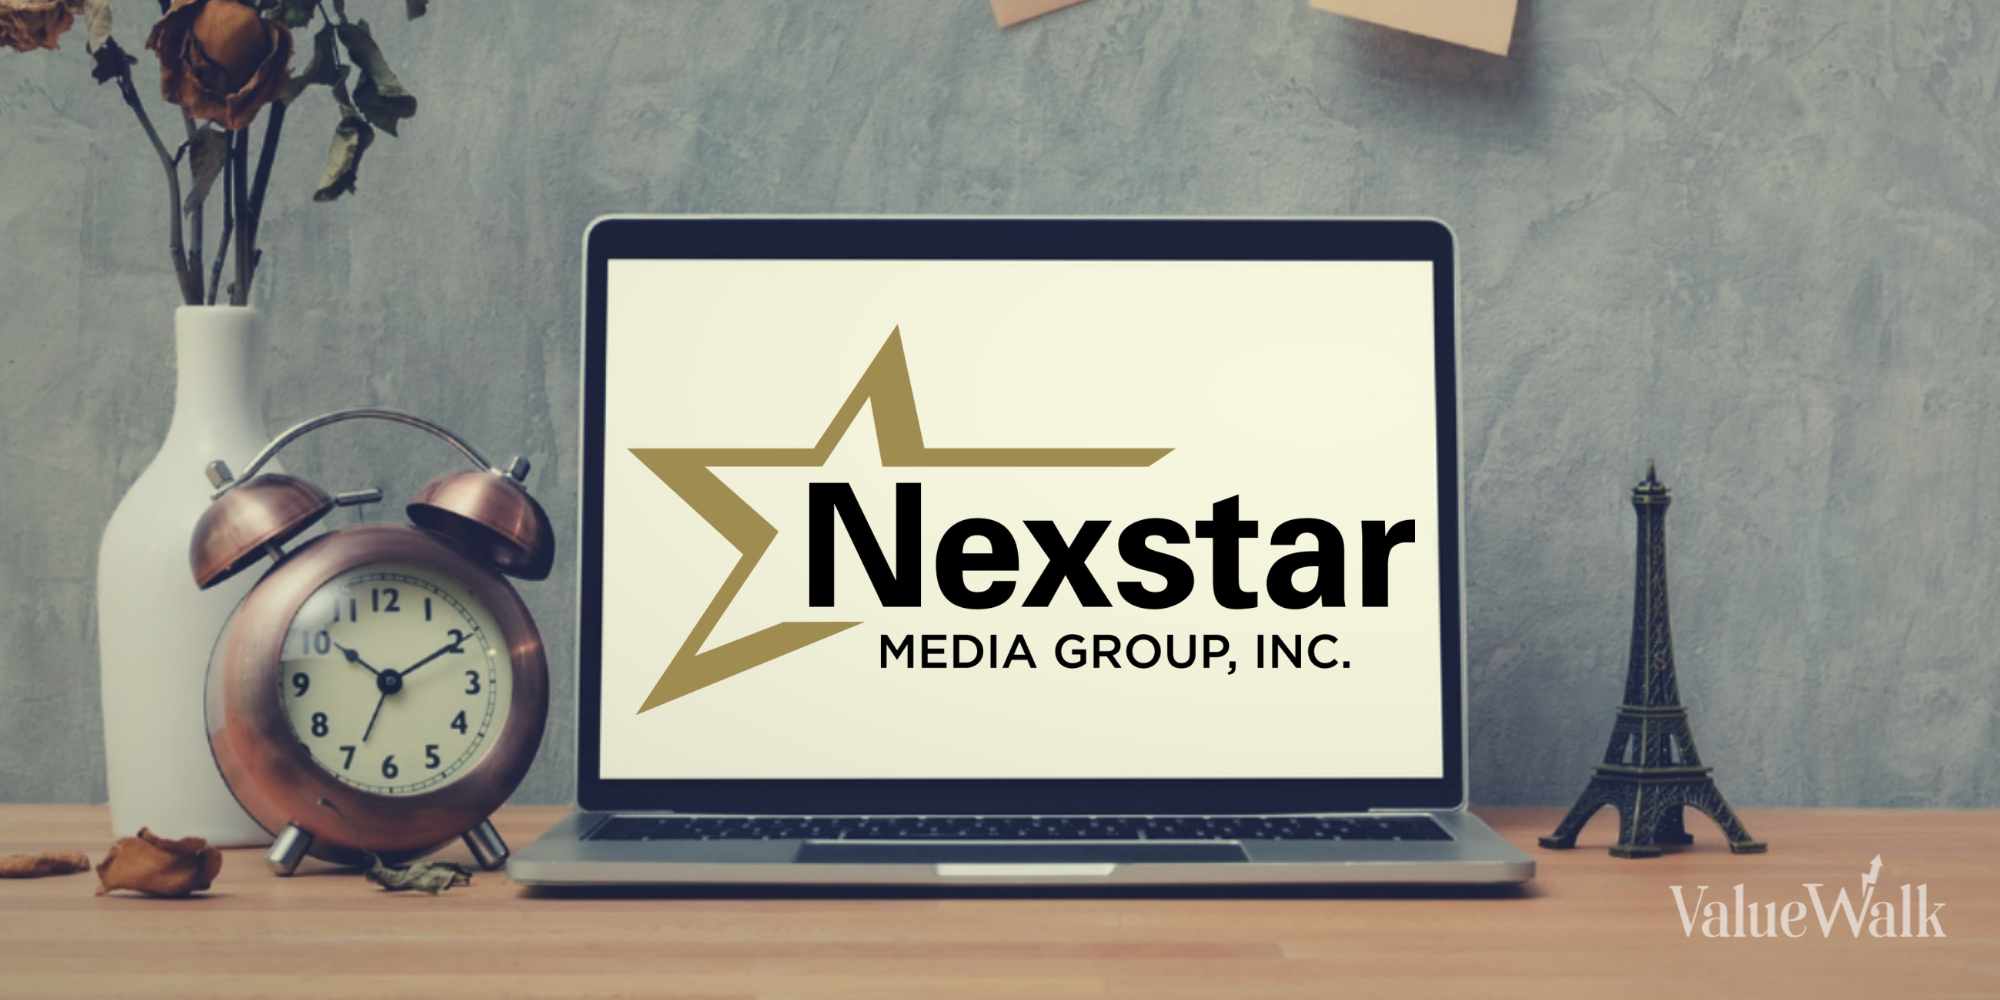 Nexstar Media Group